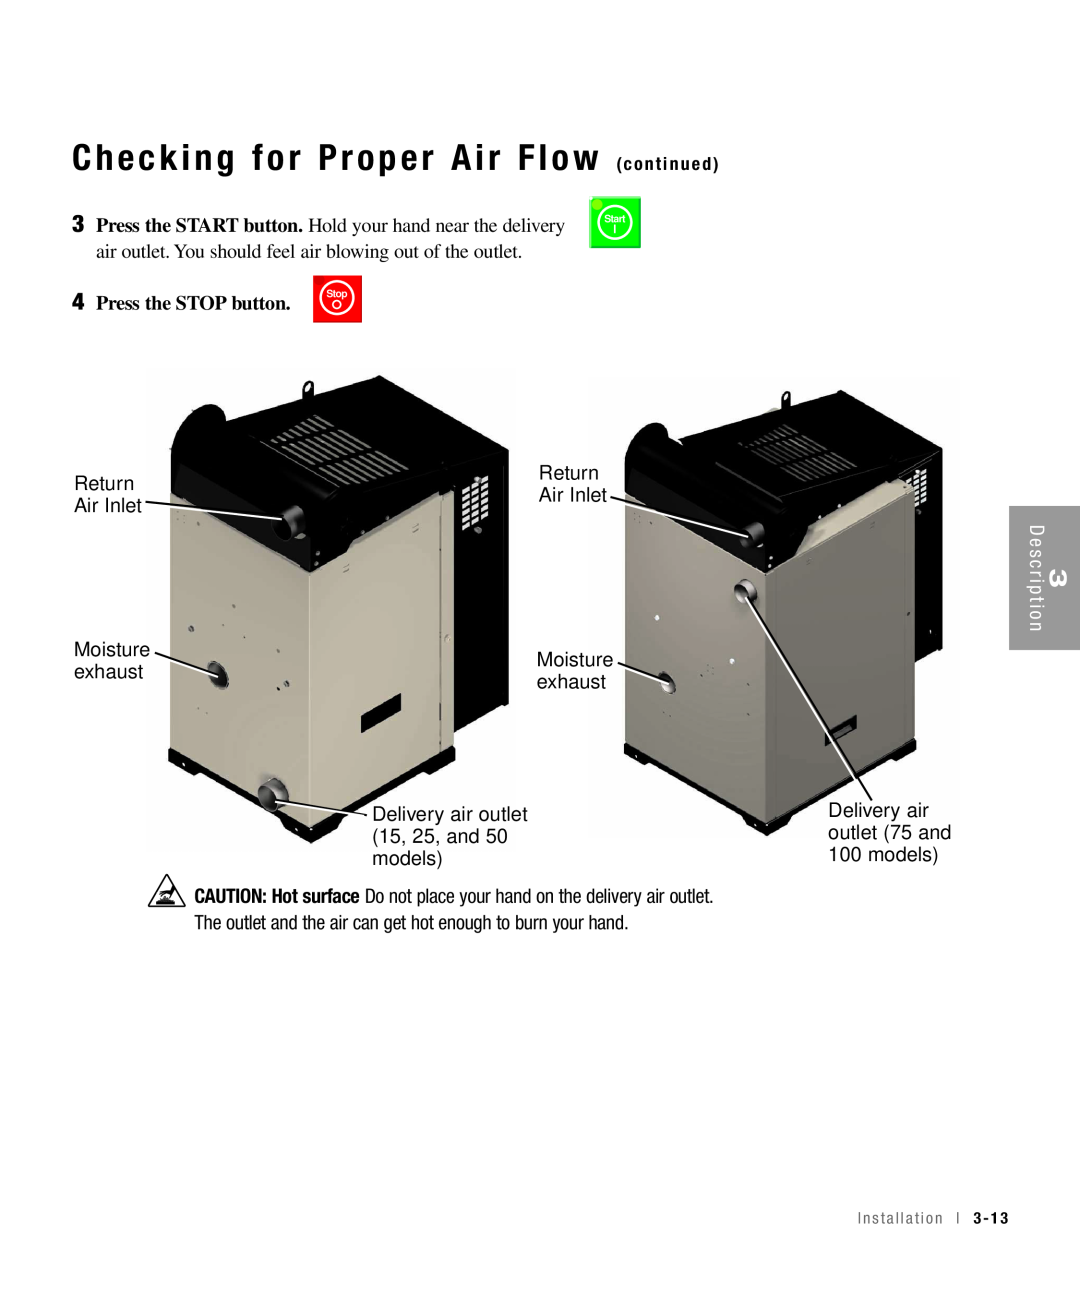 Conair 100 Checking for Proper Air Flow c o n t i n u e d, Press the STOP button, Return Air Inlet, Moisture, exhaust 